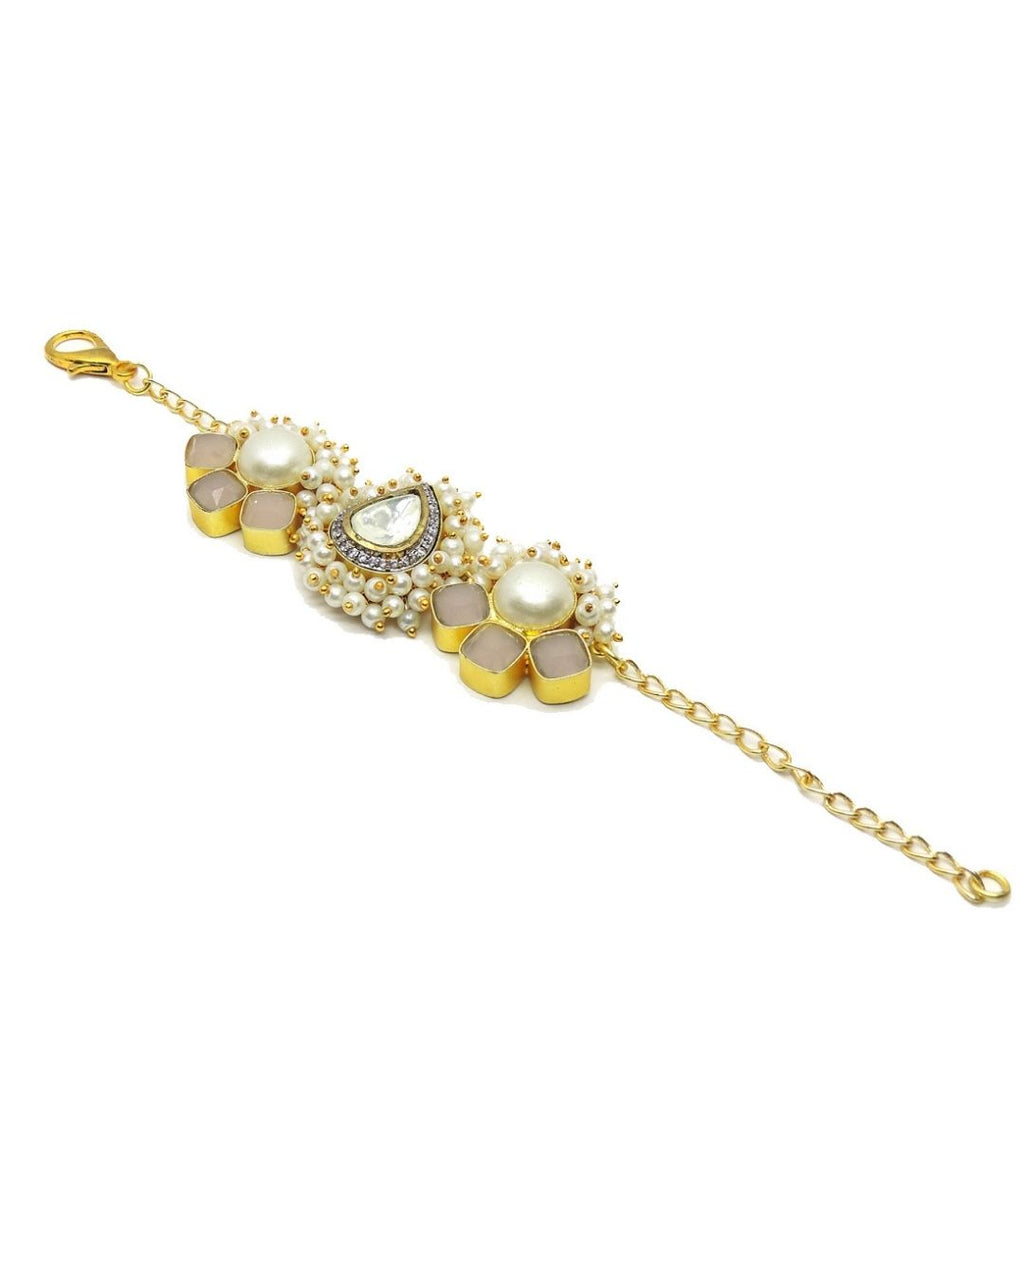 Cosette Bracelet - Bracelets & Cuffs - Handcrafted Jewellery - Made in India - Dubai Jewellery, Fashion & Lifestyle - Dori